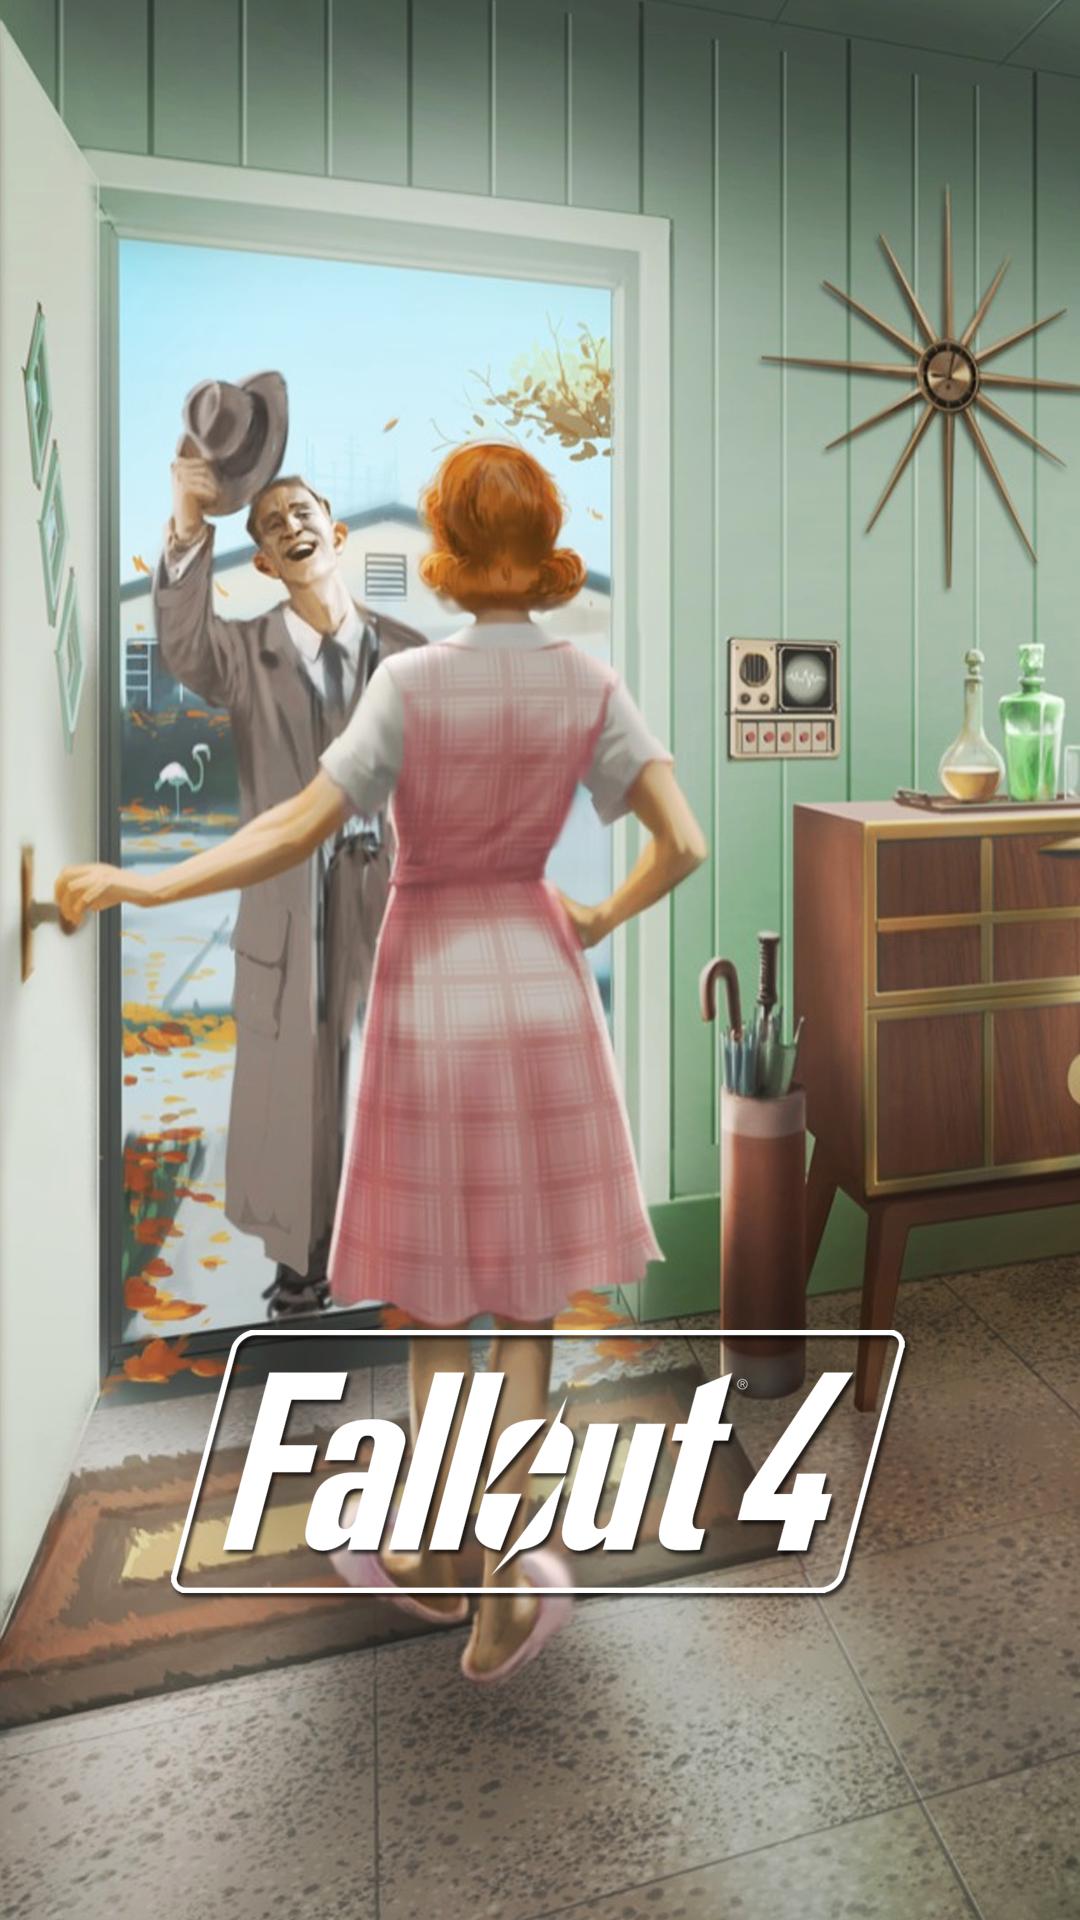 44 Fallout 4 Android Wallpaper On Wallpapersafari